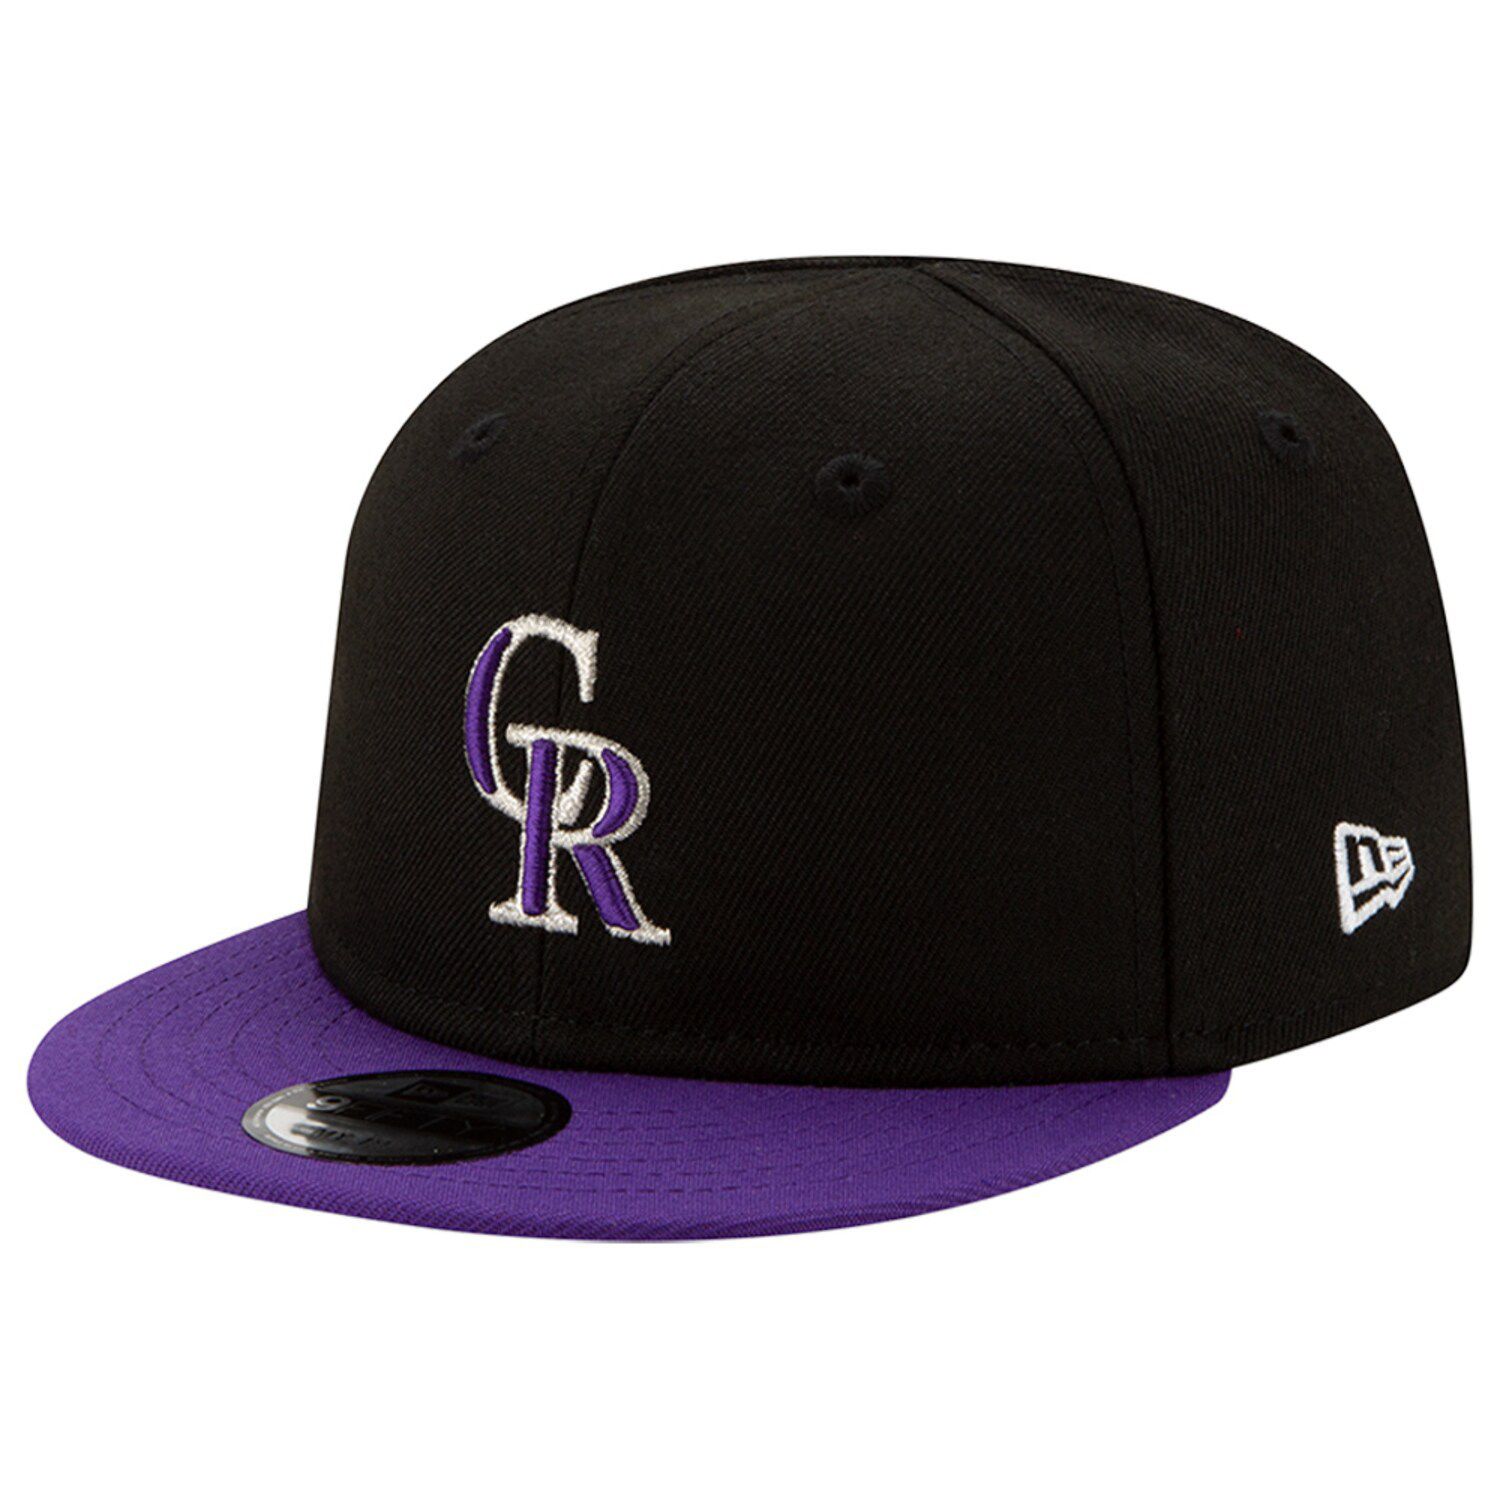 Colorado Rockies Hat Baseball Cap Fitted 7 3/8 New Era MLB Authentic Black  Adult